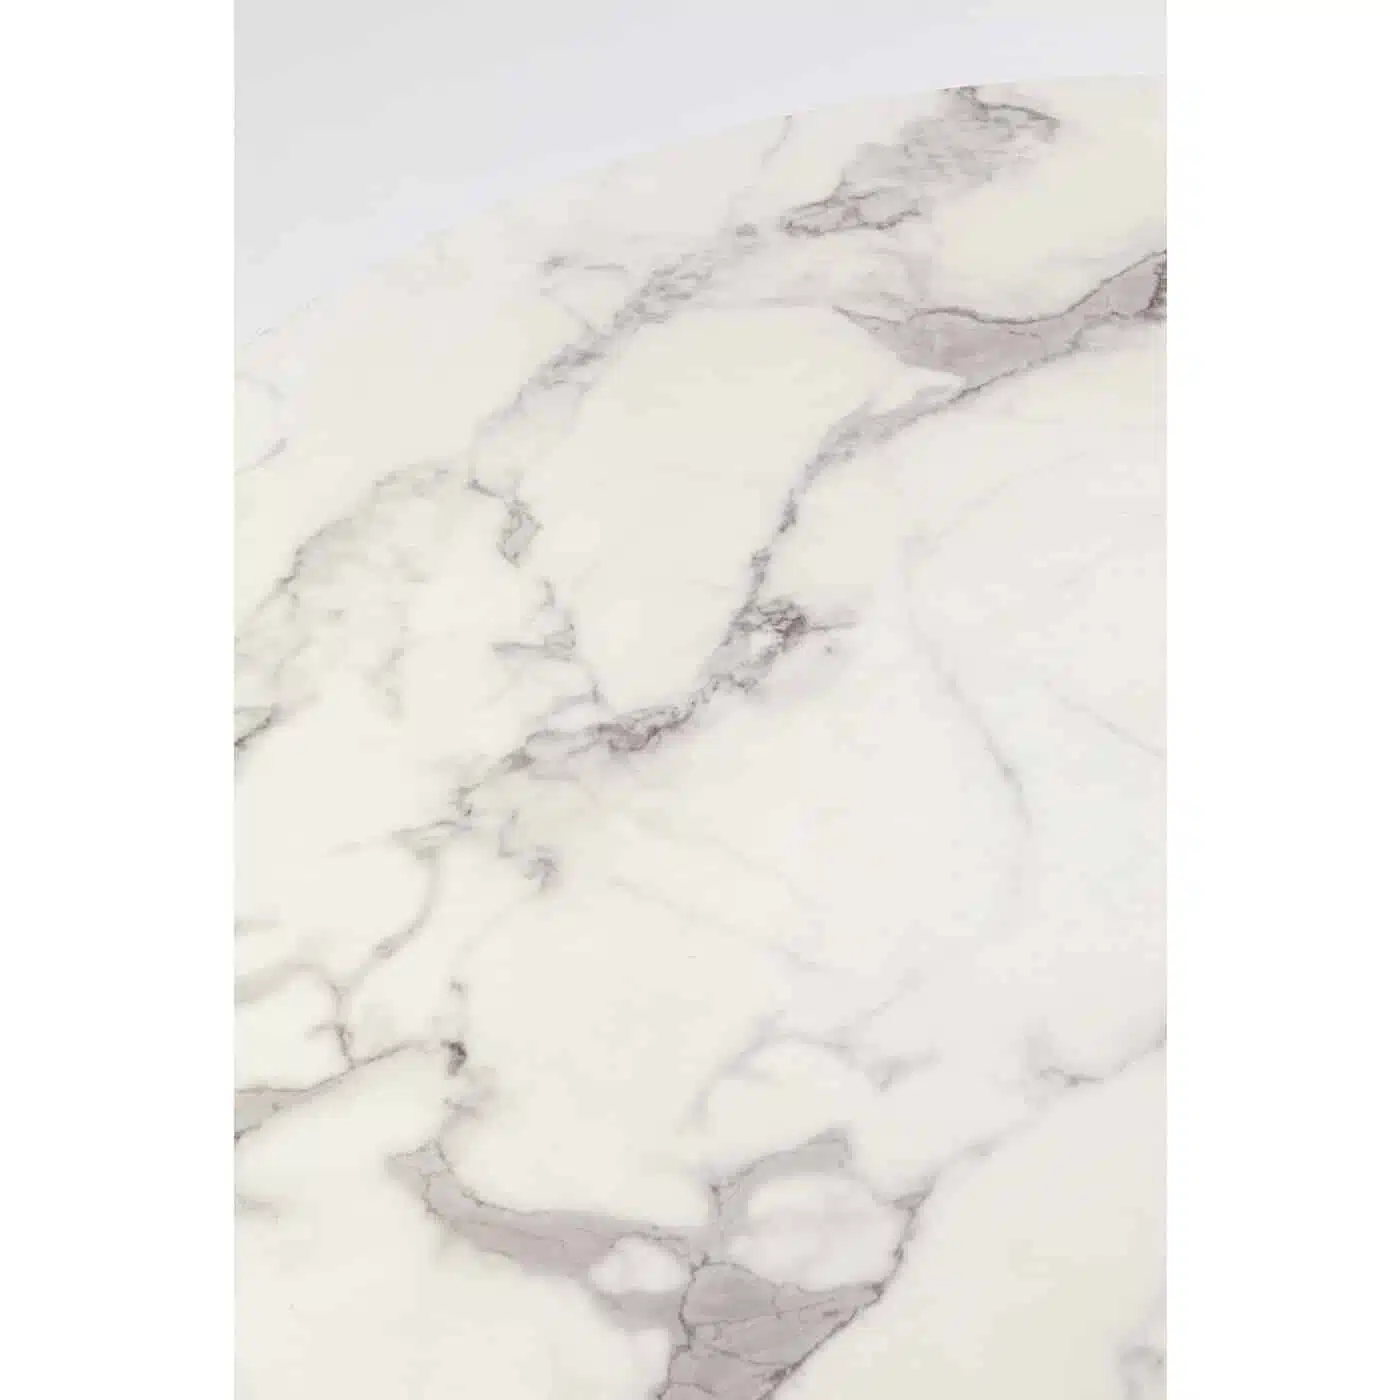 Table Schickeria 110cm effet marbre blanc Kare Design